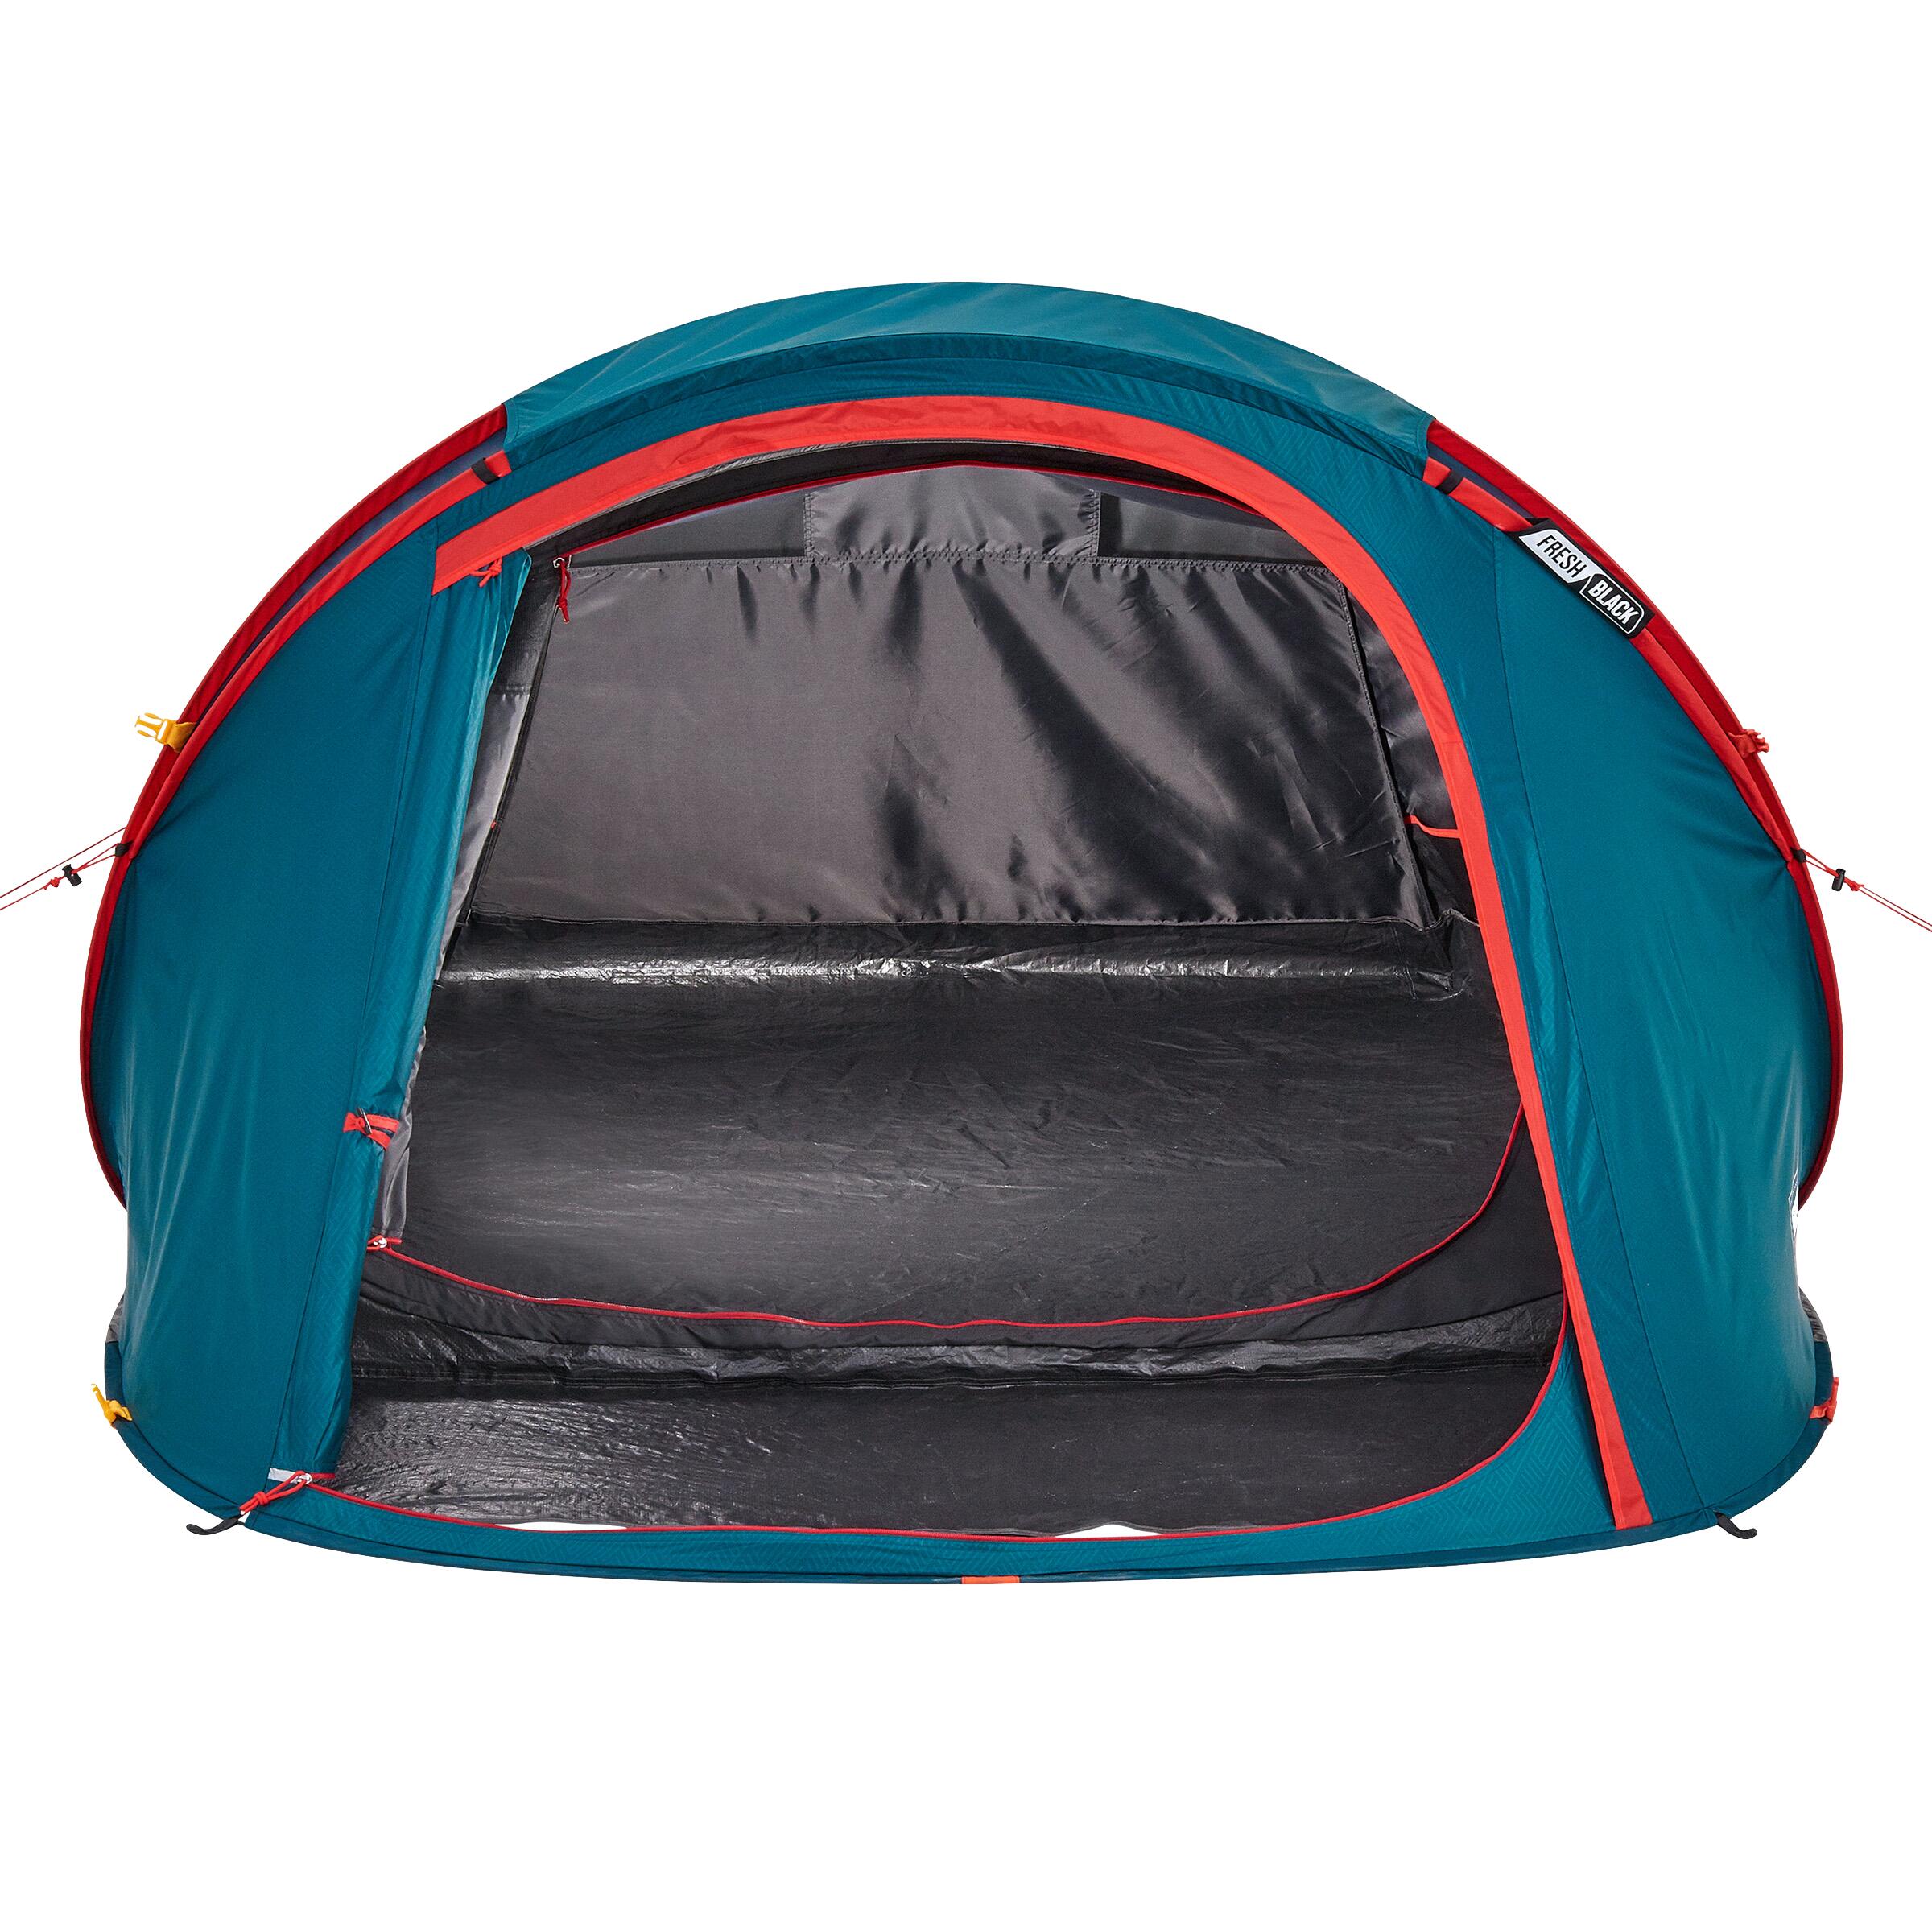 Camping tent - 2 SECONDS XL - 2-person - Fresh & Black 4/9